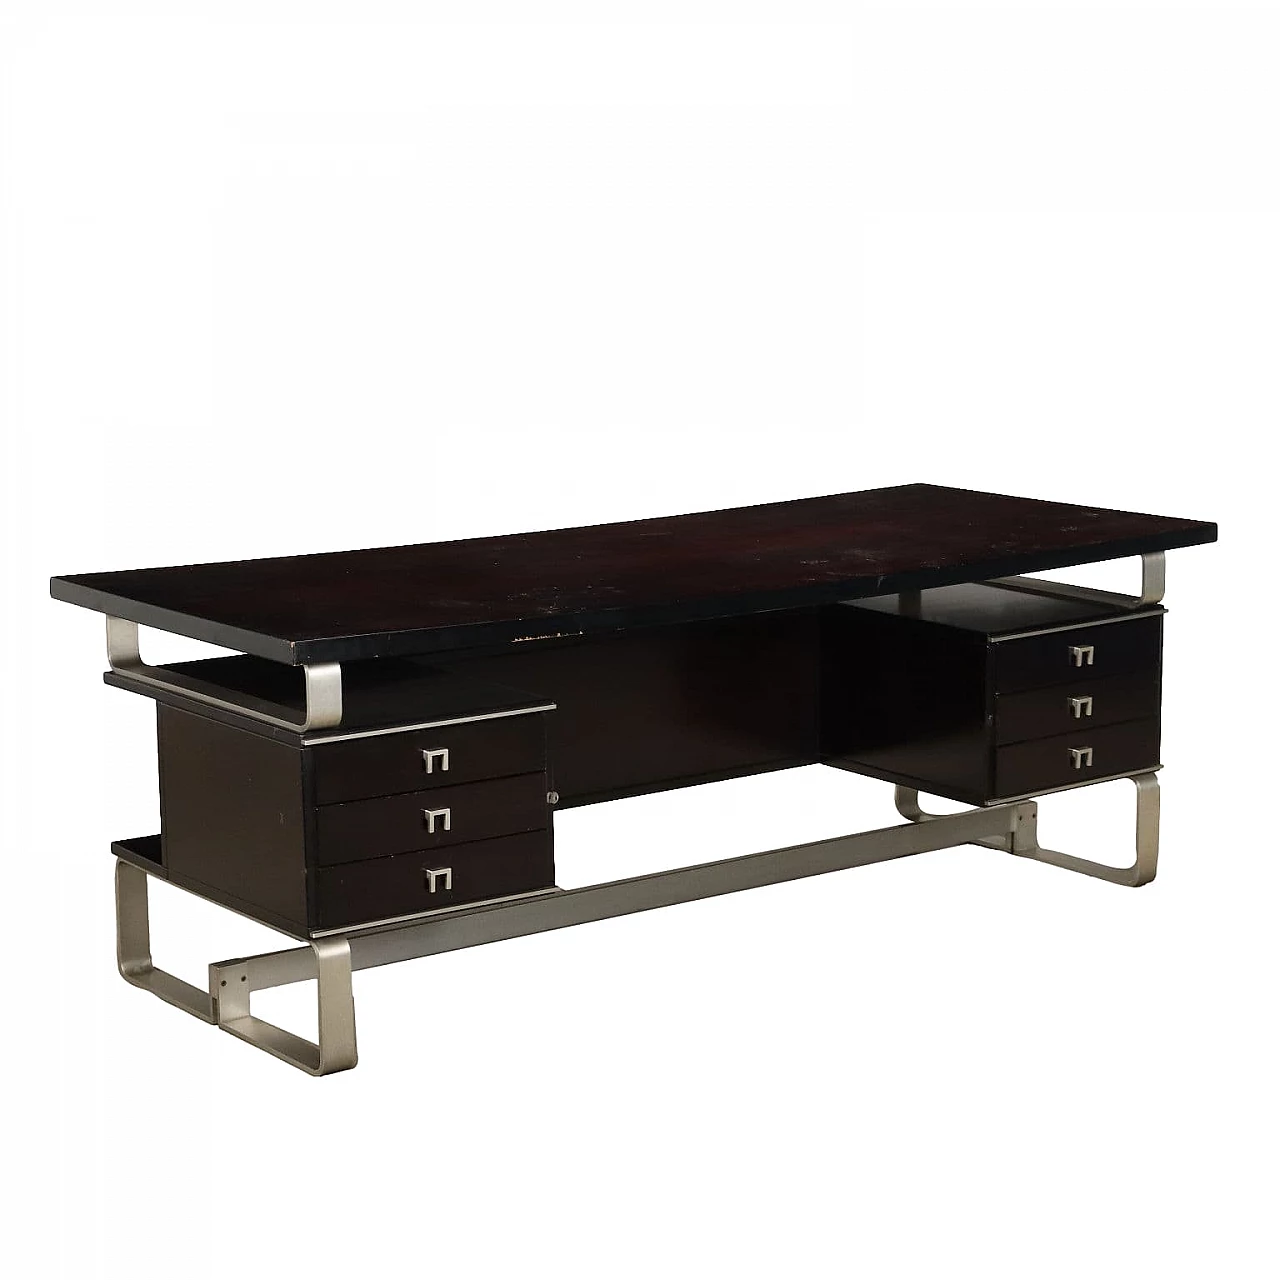 Black wood veneer desk with chrome-plated aluminum details, 1960s 1